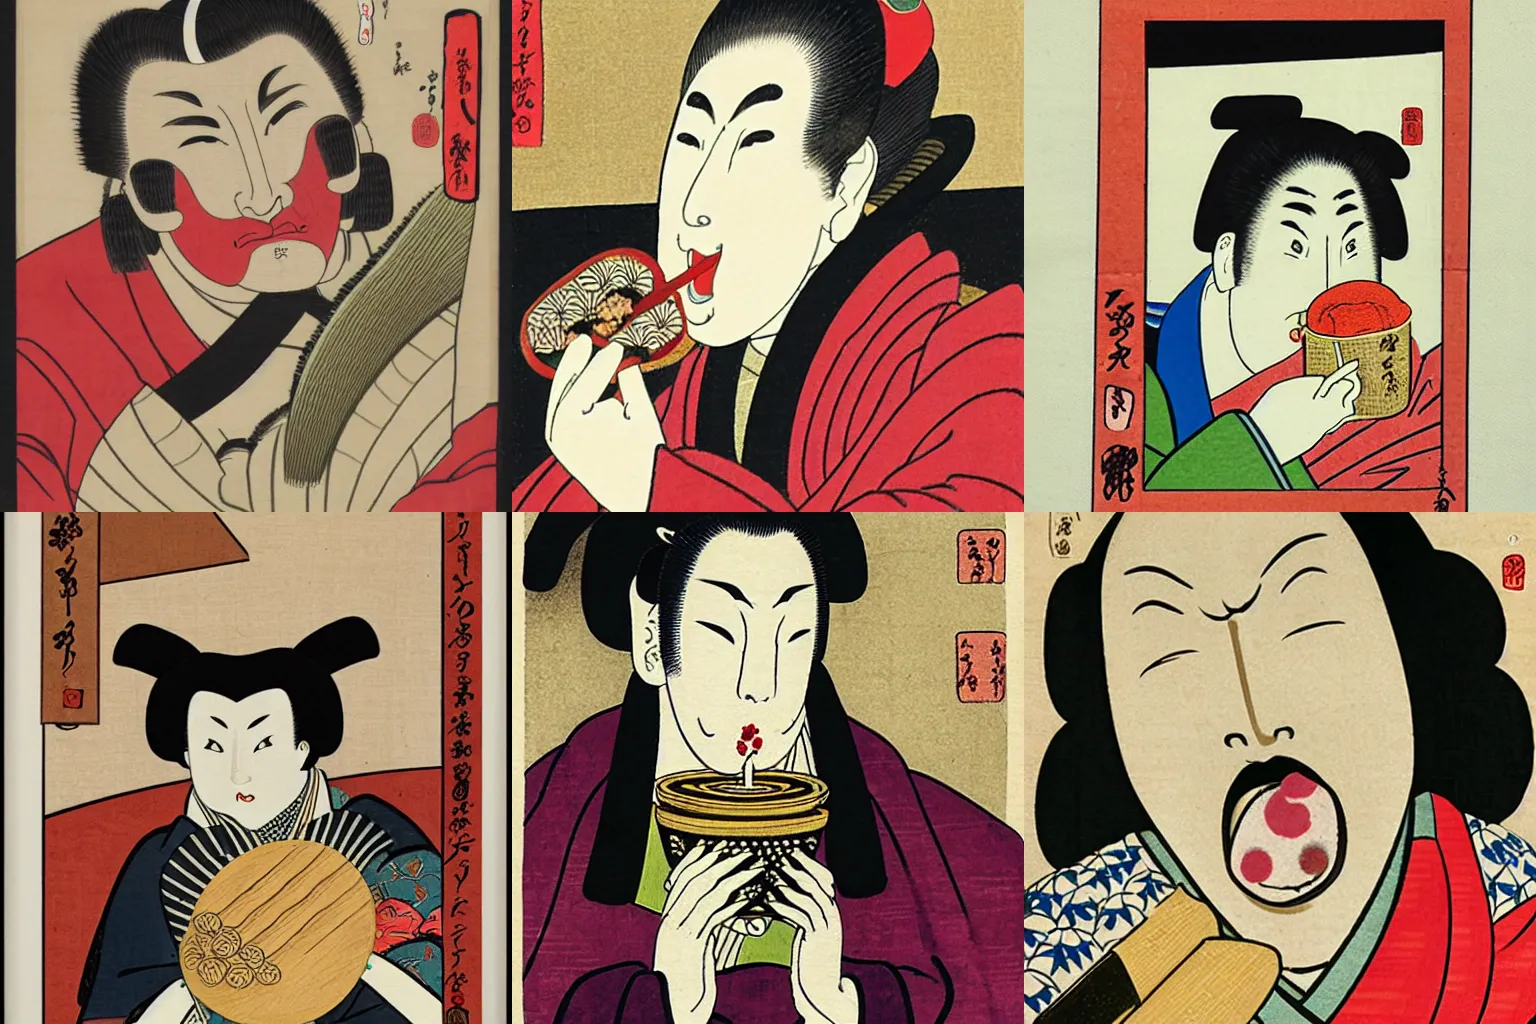 Prompt: ukiyo-e kabuki actor eating an ice cream wood block print